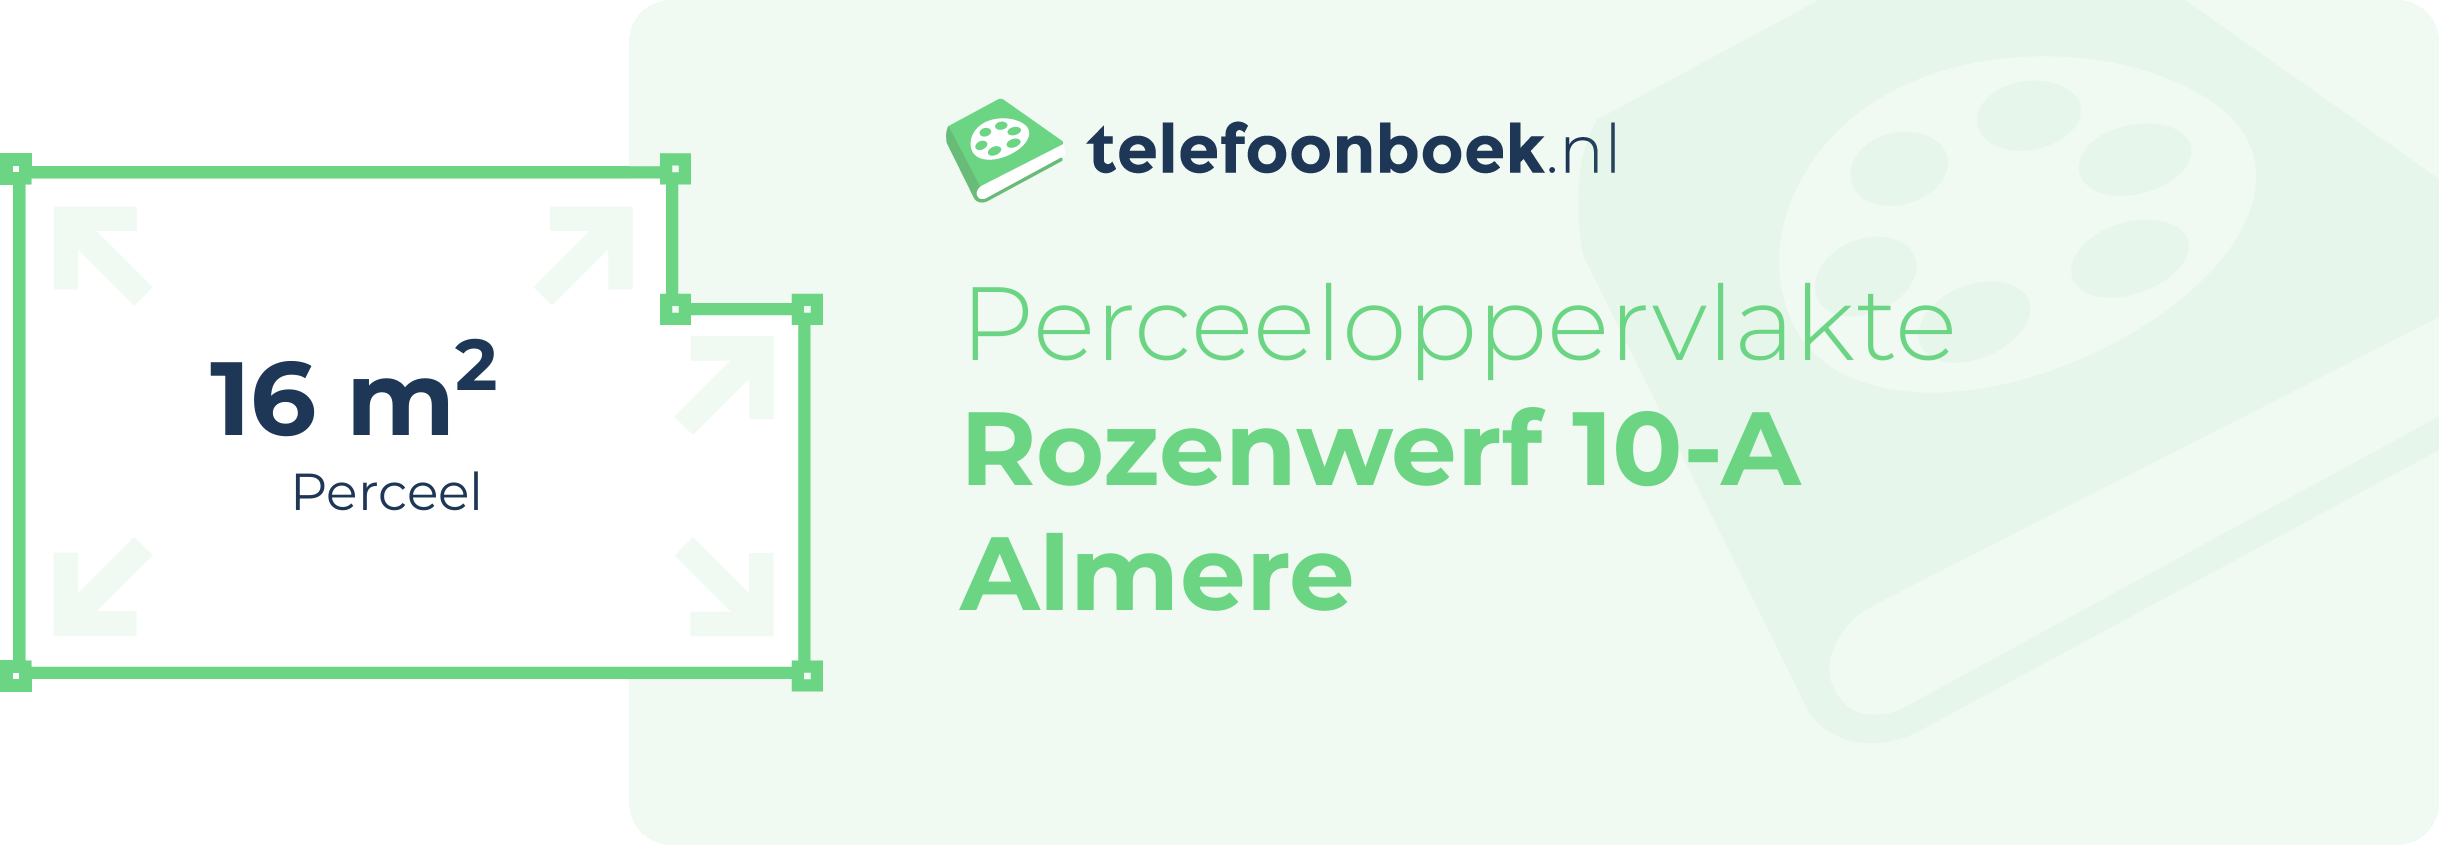 Perceeloppervlakte Rozenwerf 10-A Almere